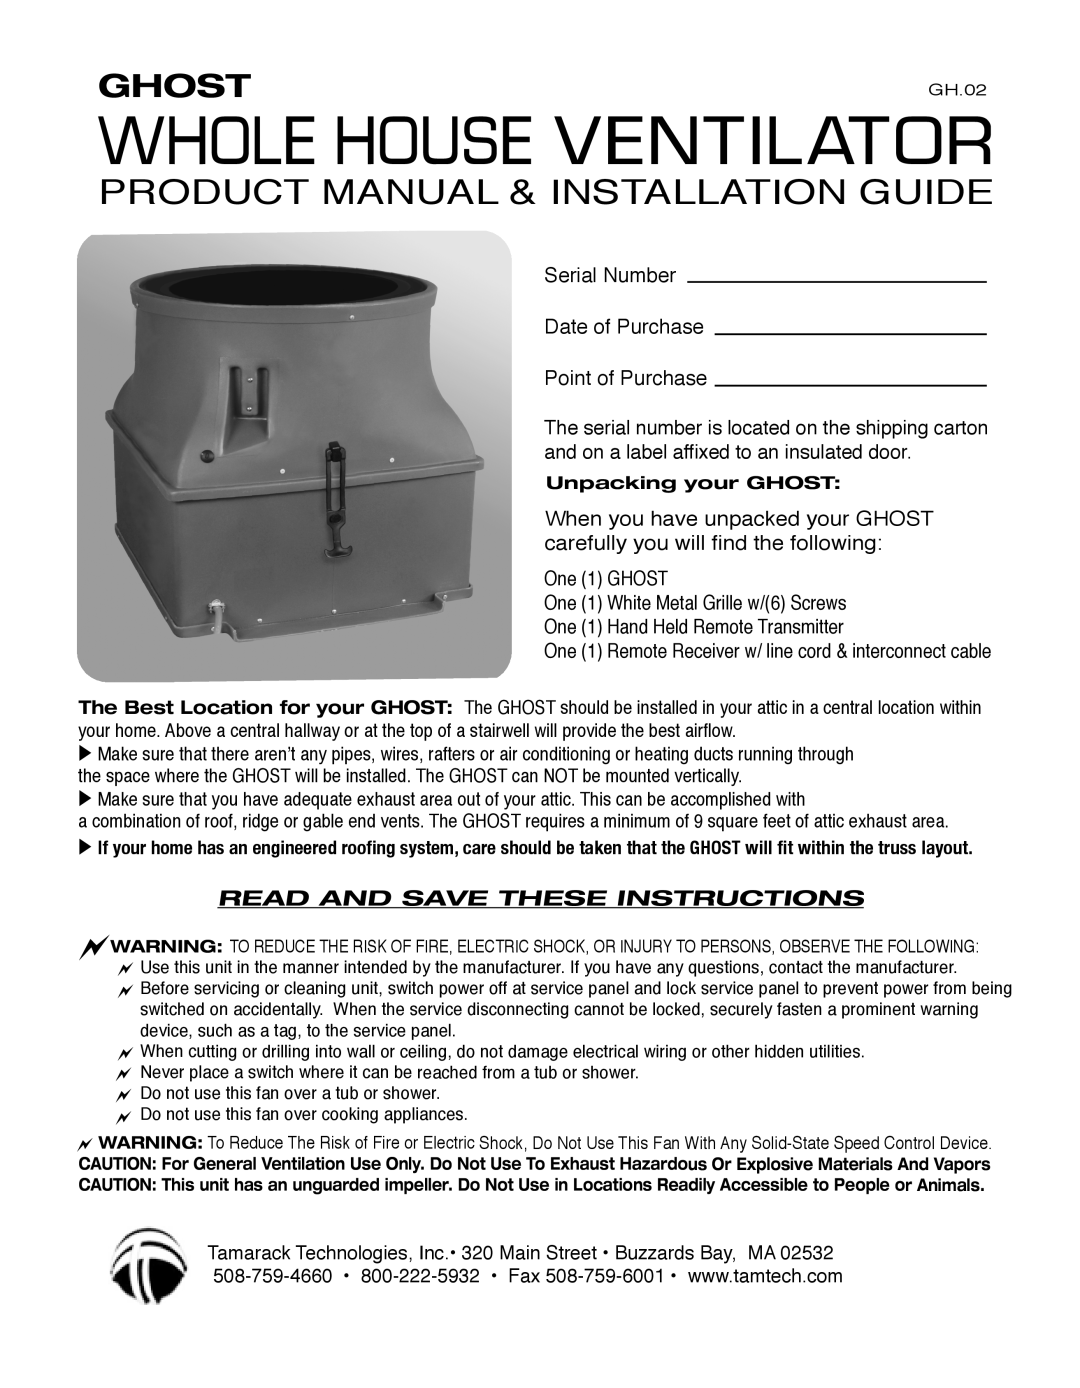 Tamarack Technologies GH.02 manual WHOLE hoUSE VENTILATOR, Product Manual & Installation Guide, Ghost 